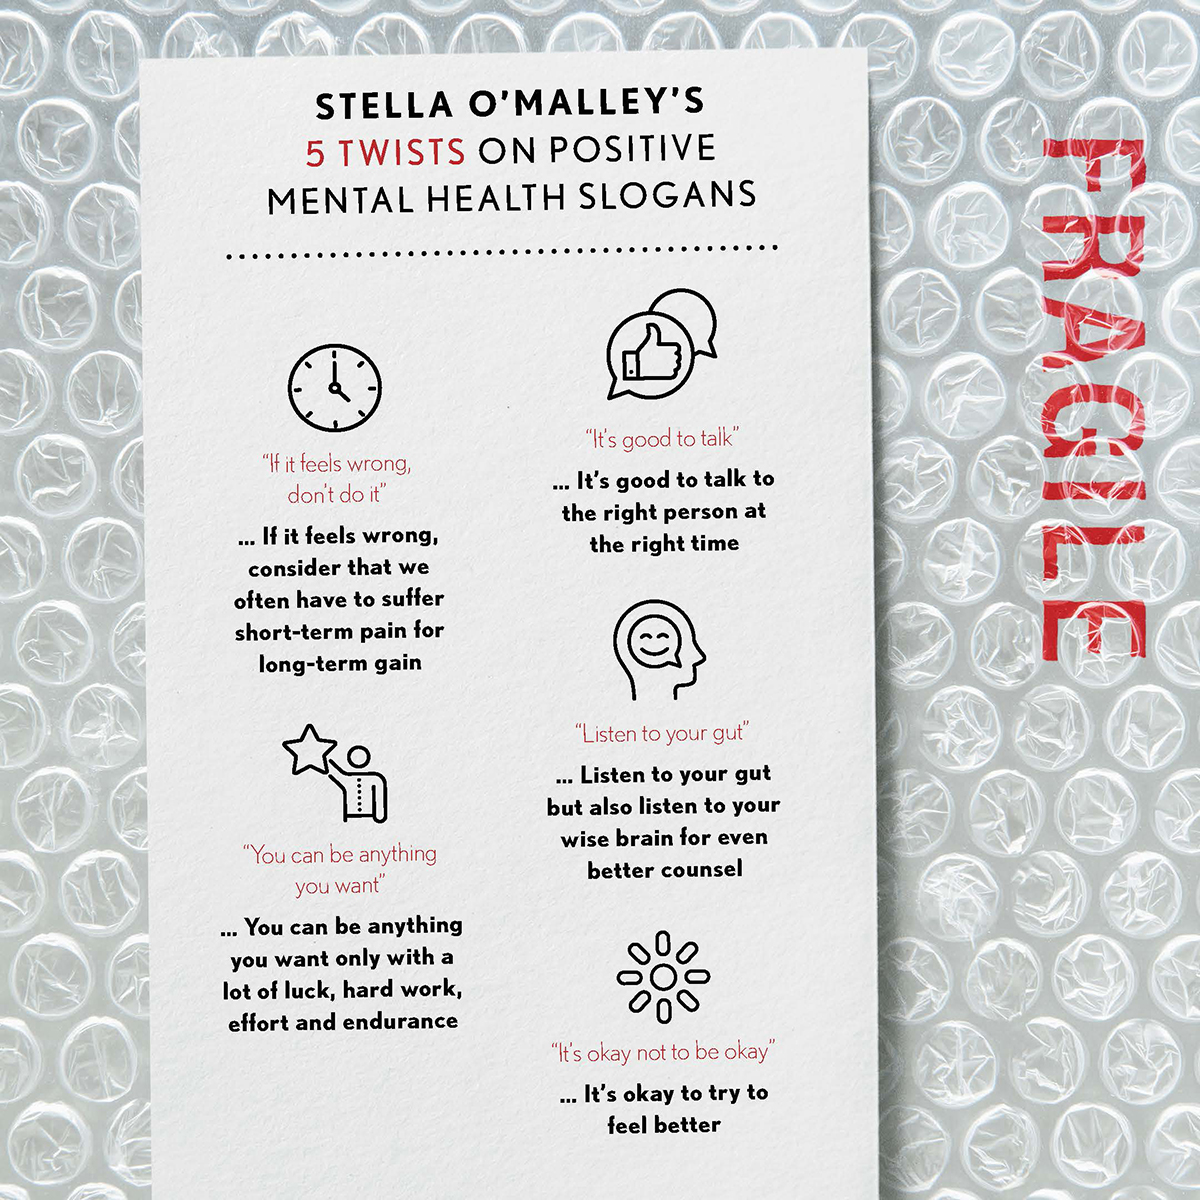 Stella O'Malley's 5 twists on positive mental health slogans